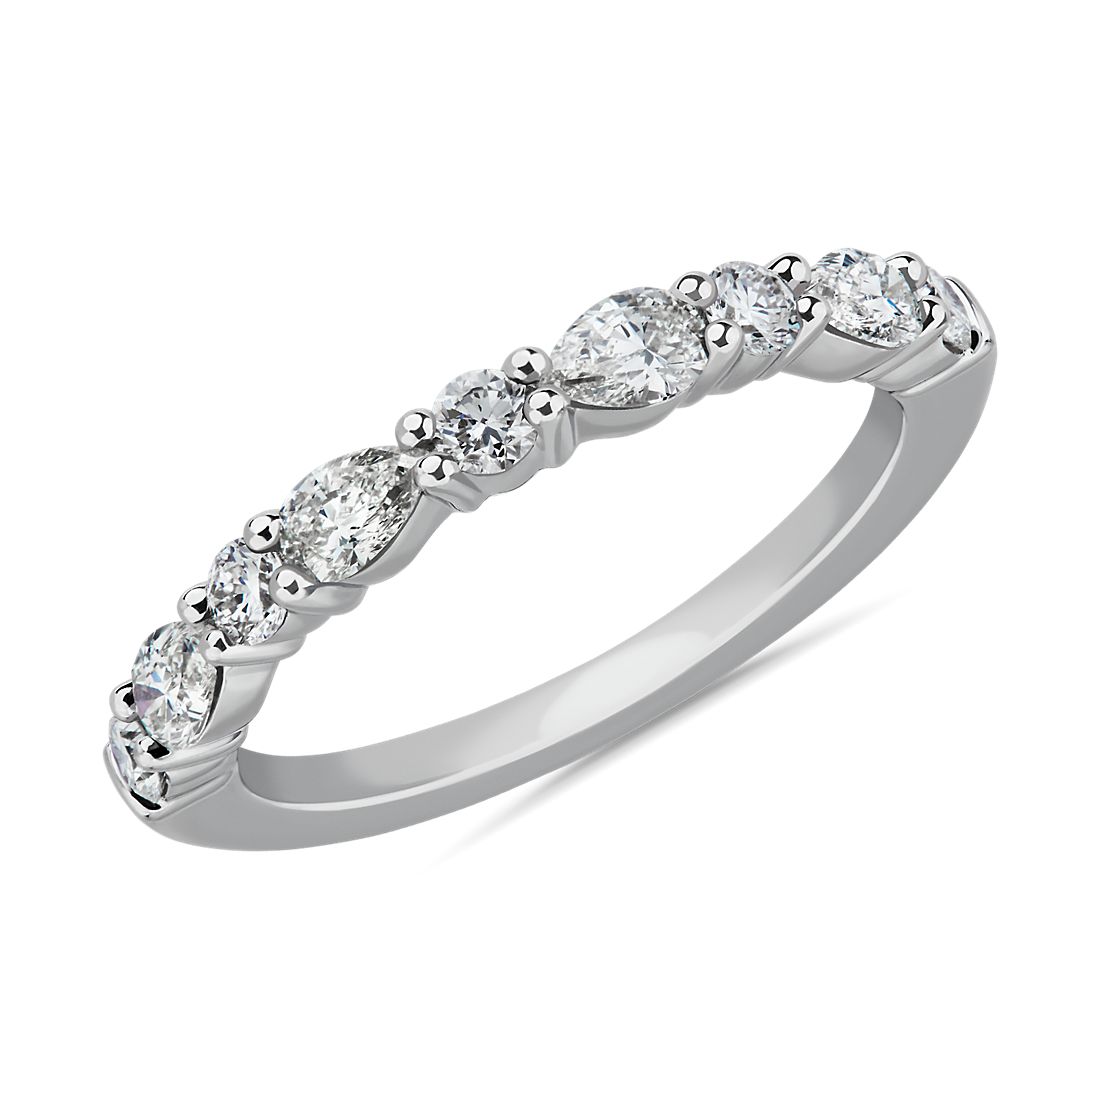 J'adore Le Jardin Diamond Wedding Ring in 14k White Gold (5/8 ct. tw.) - Valentine's Day jewelry